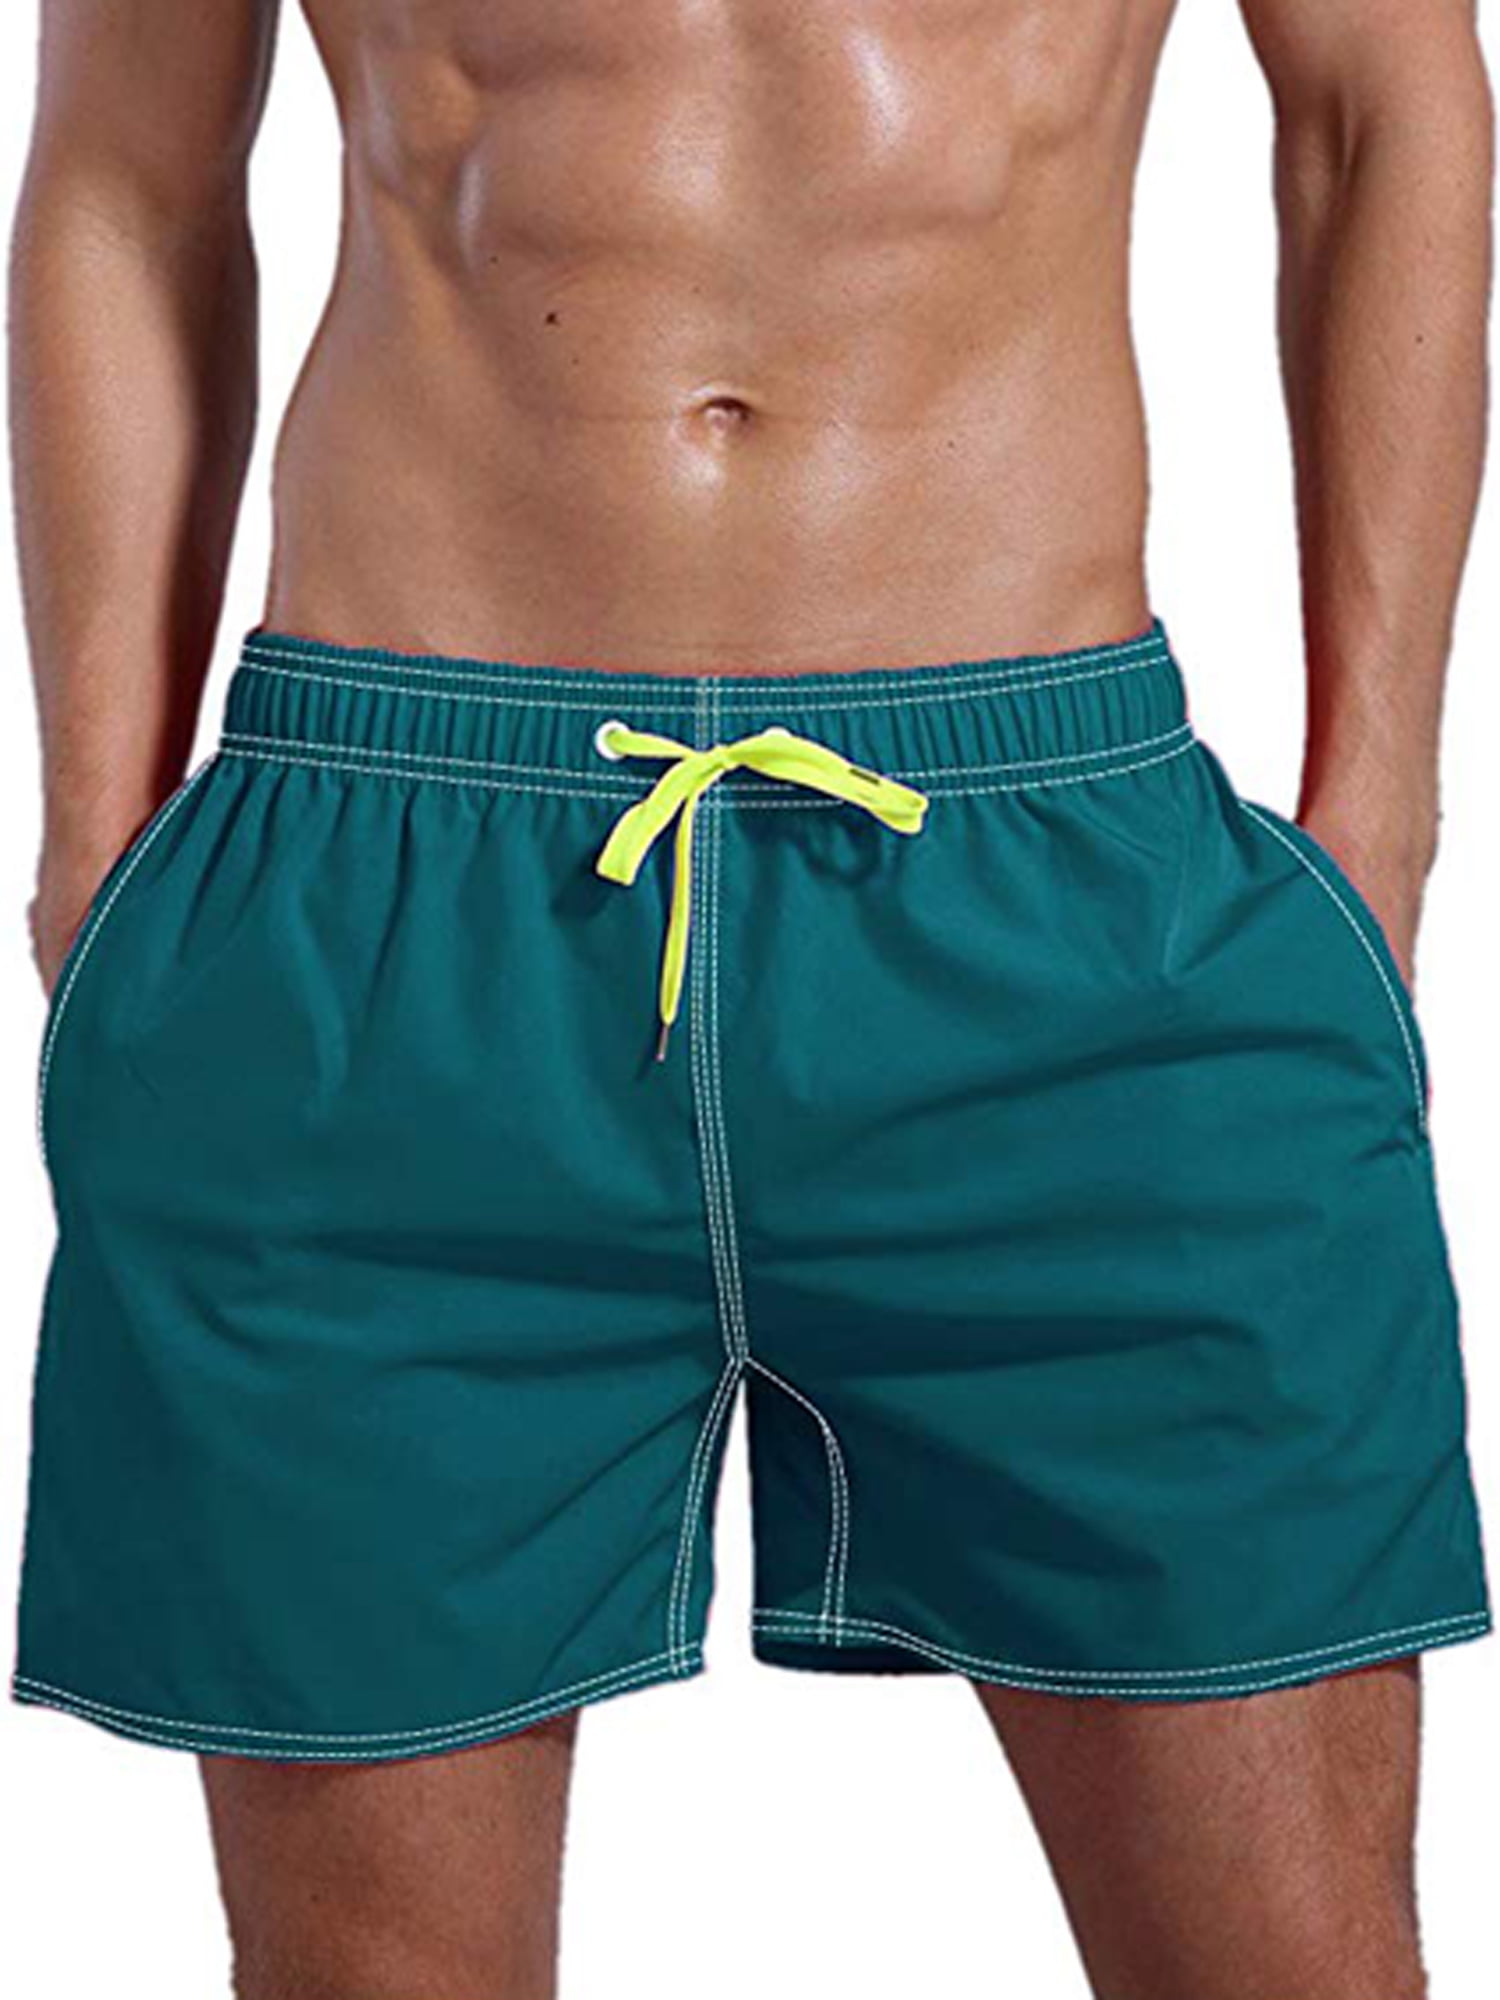 mens swim shorts with zipper pockets